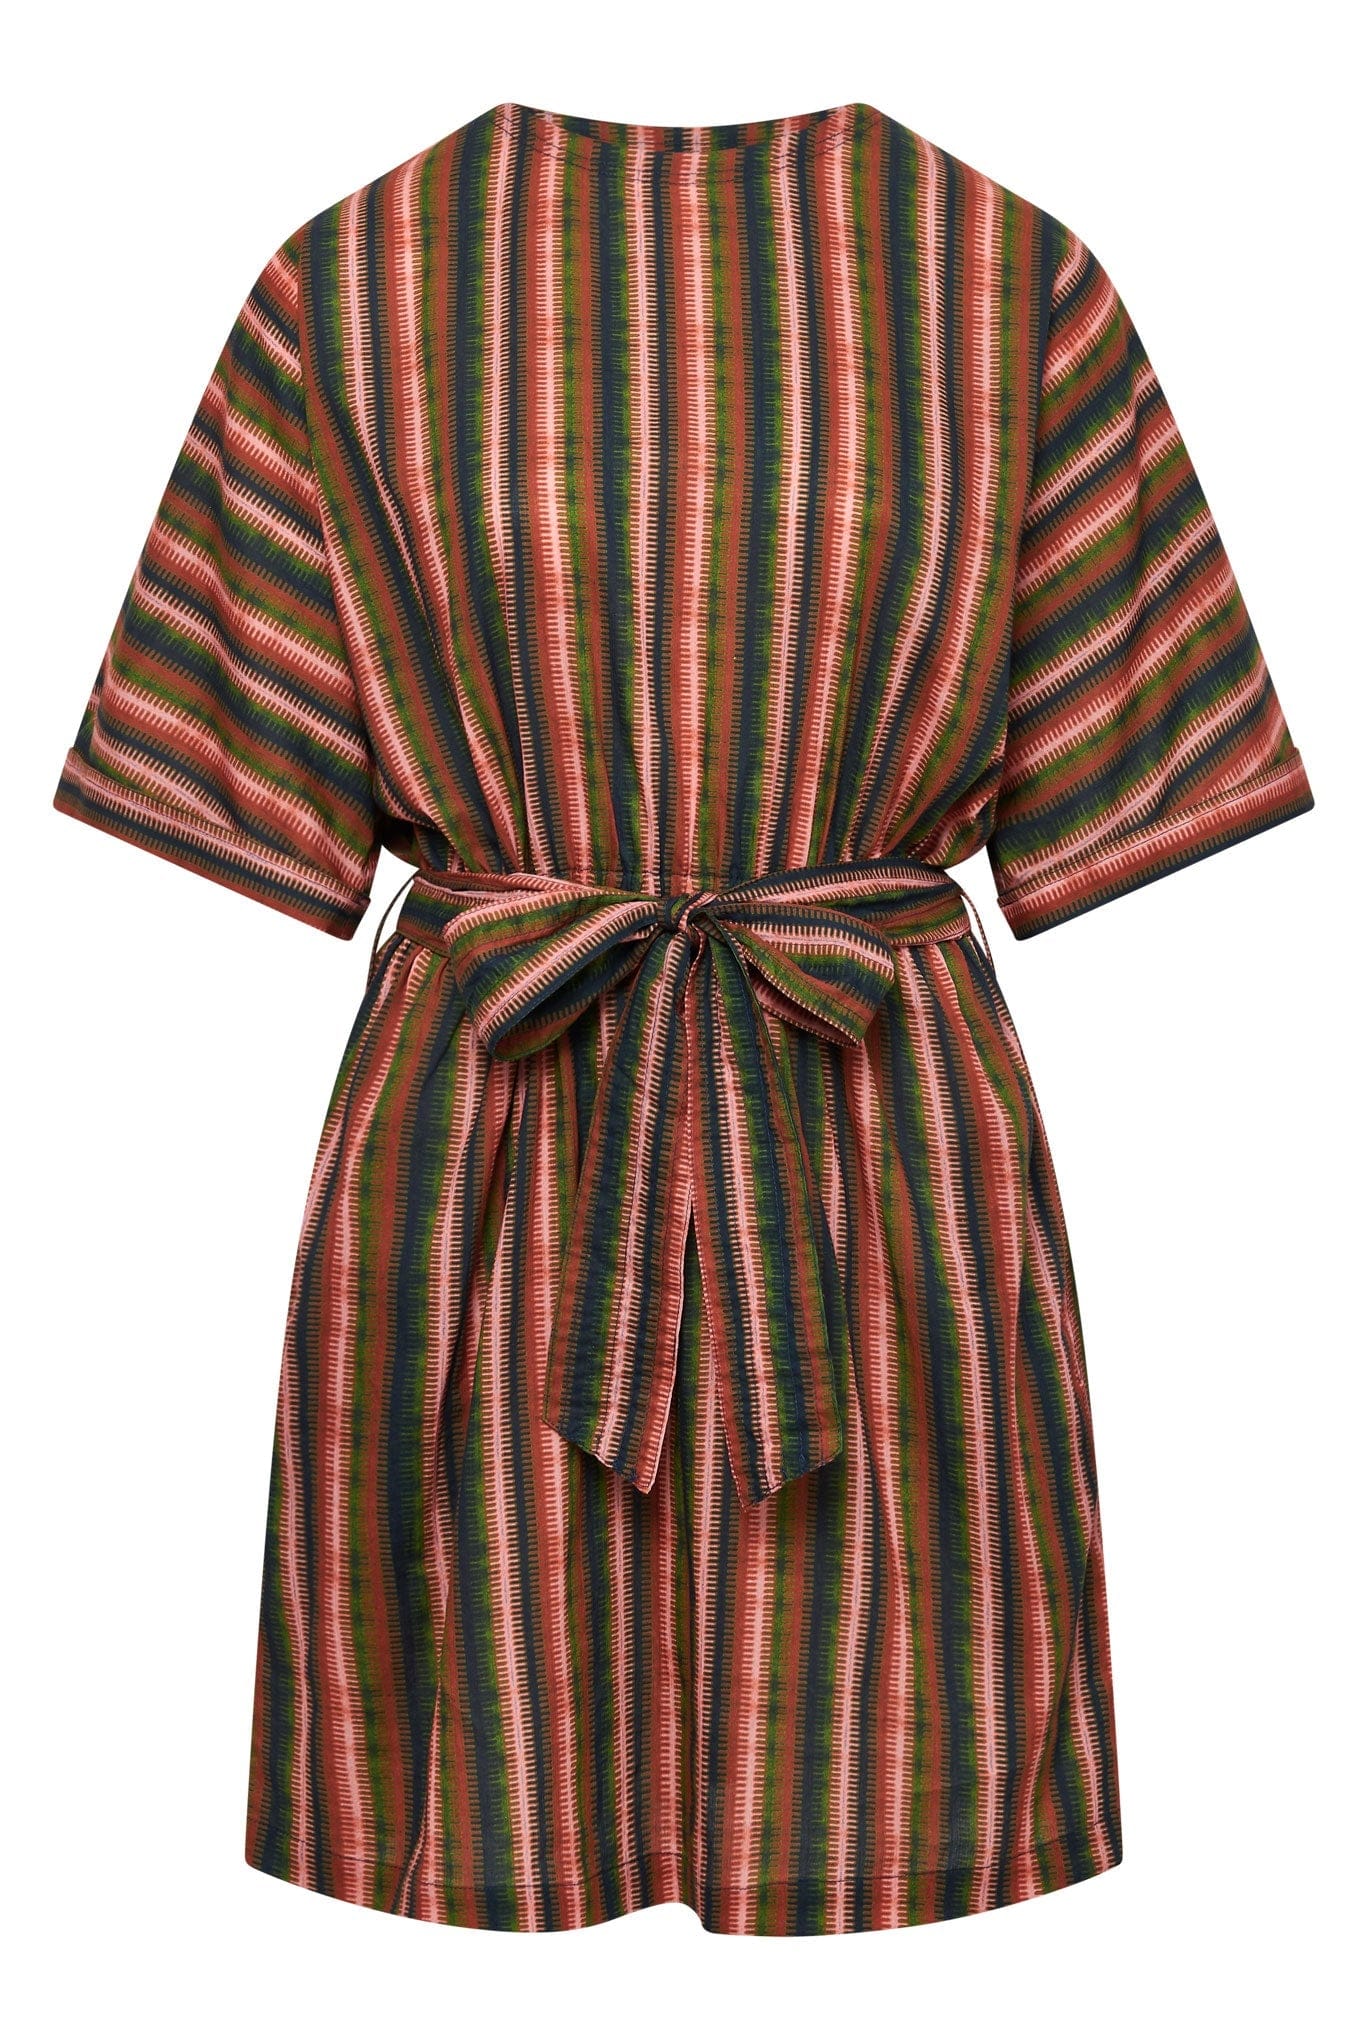 KOMODO AZUL - Organic Cotton Weave Stripe Dress Green